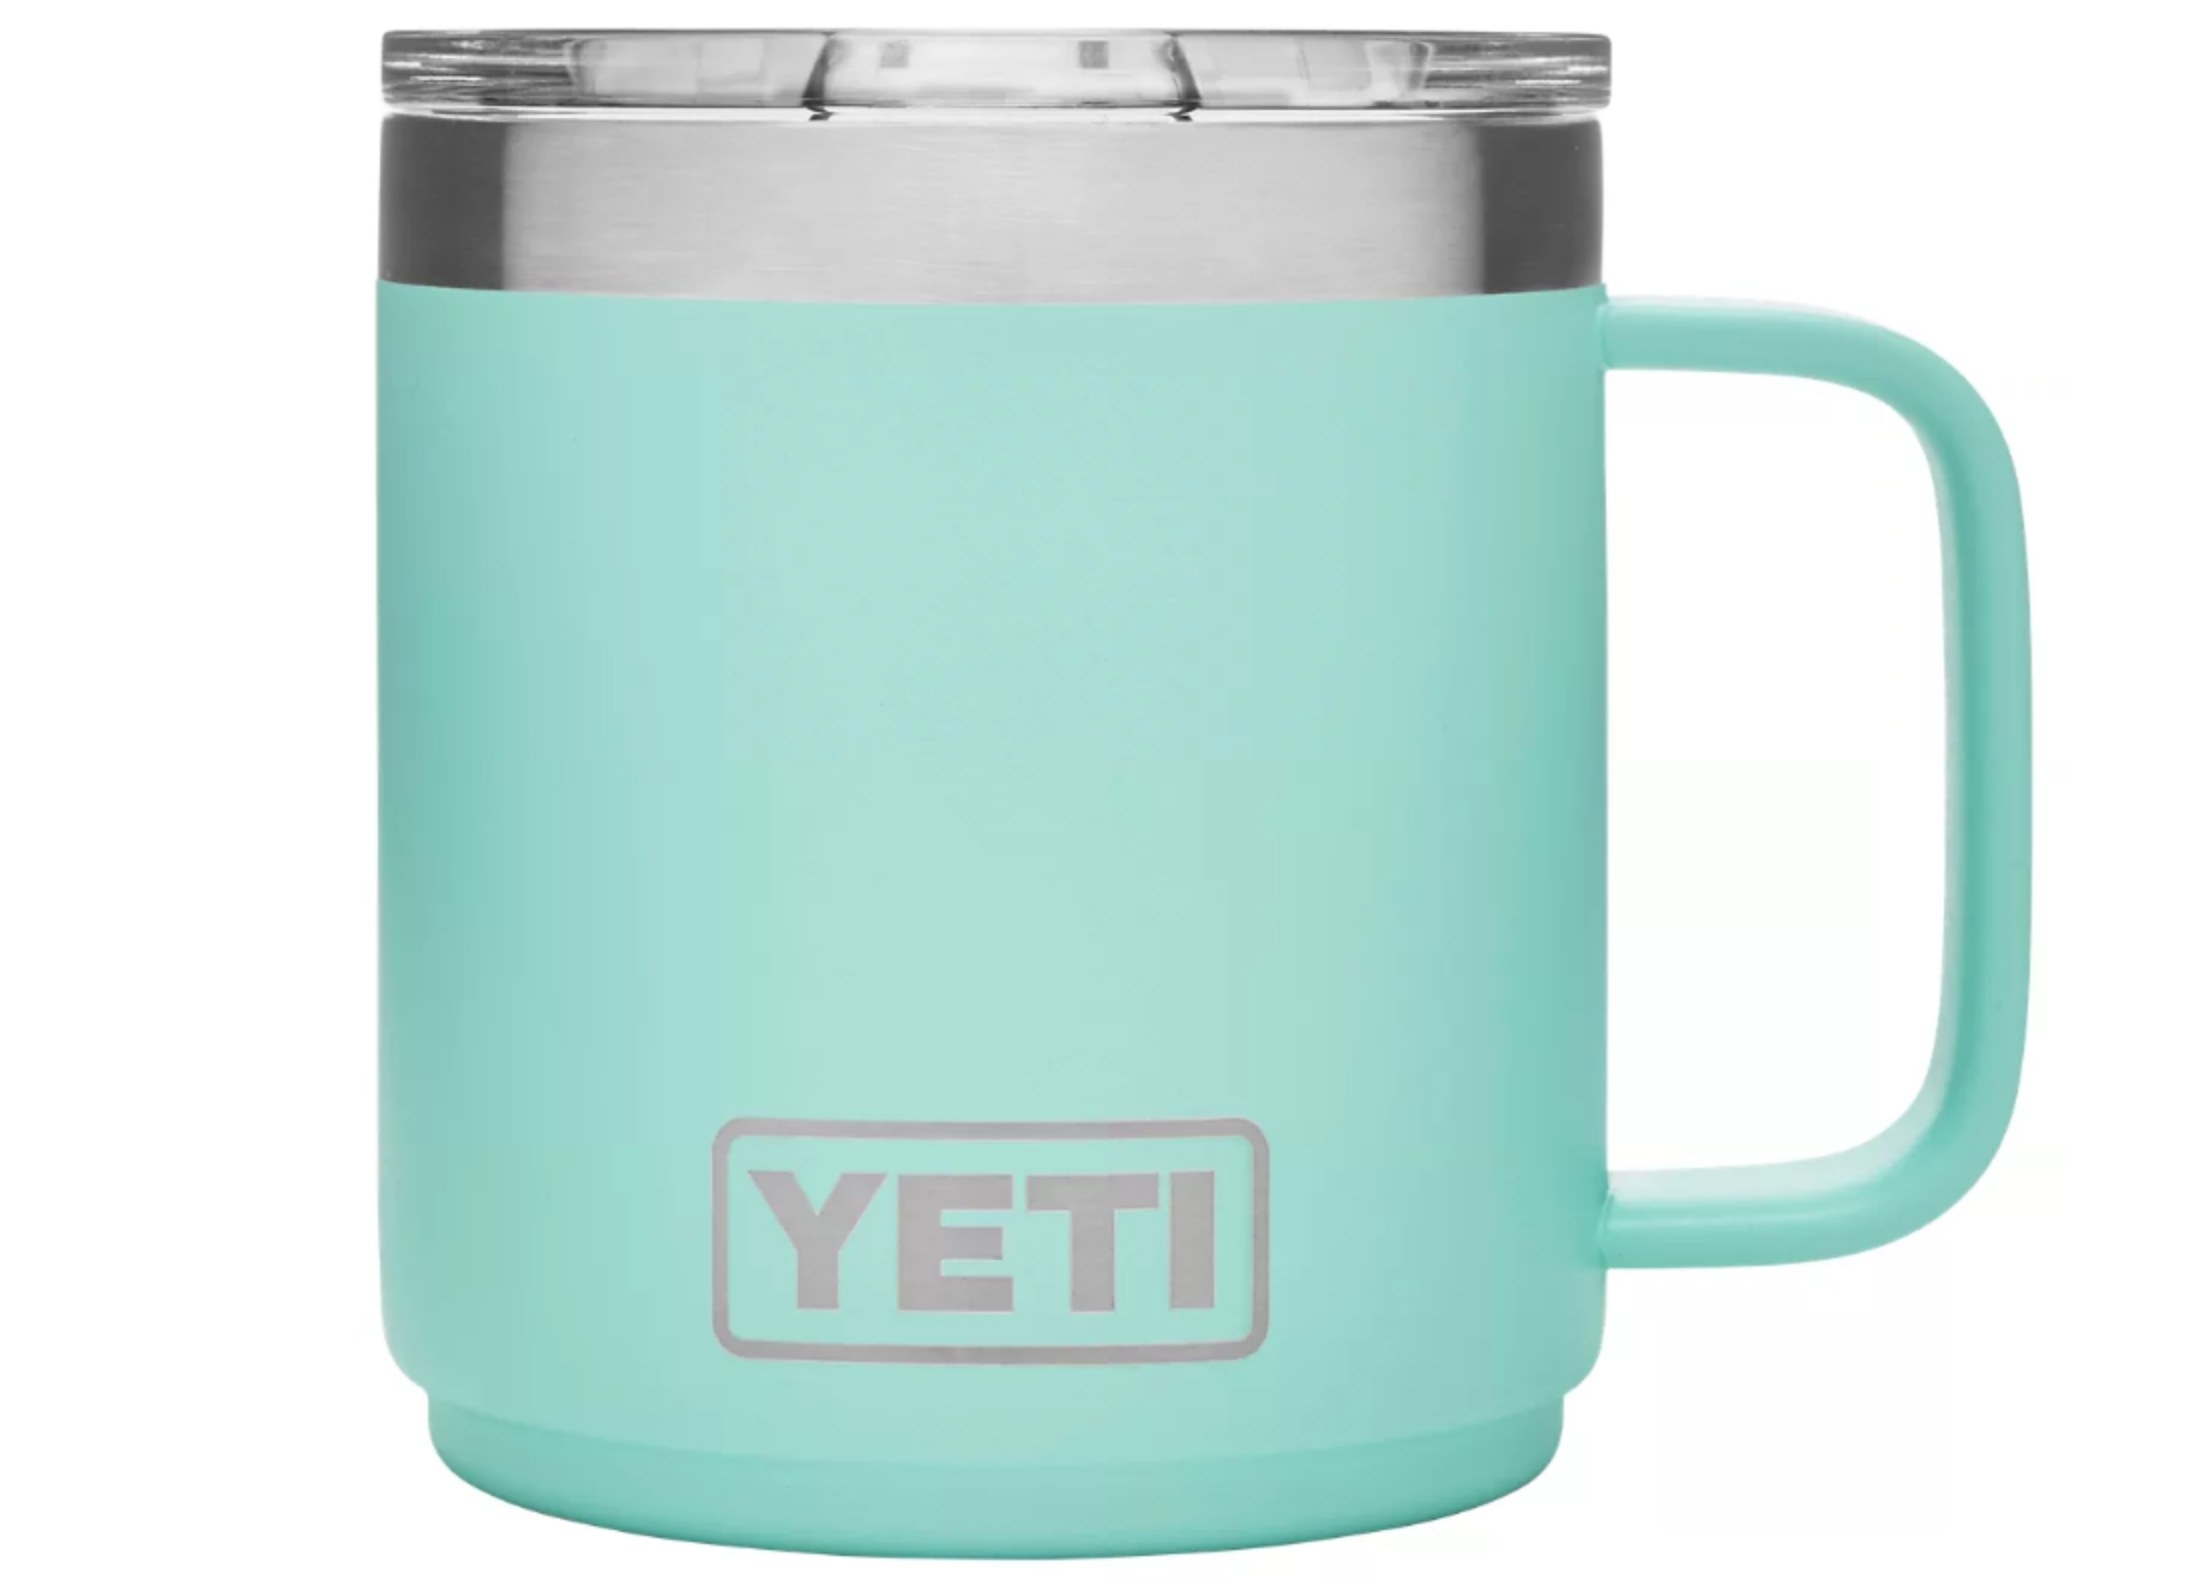 the Yeti rambler stackable mug in aqua